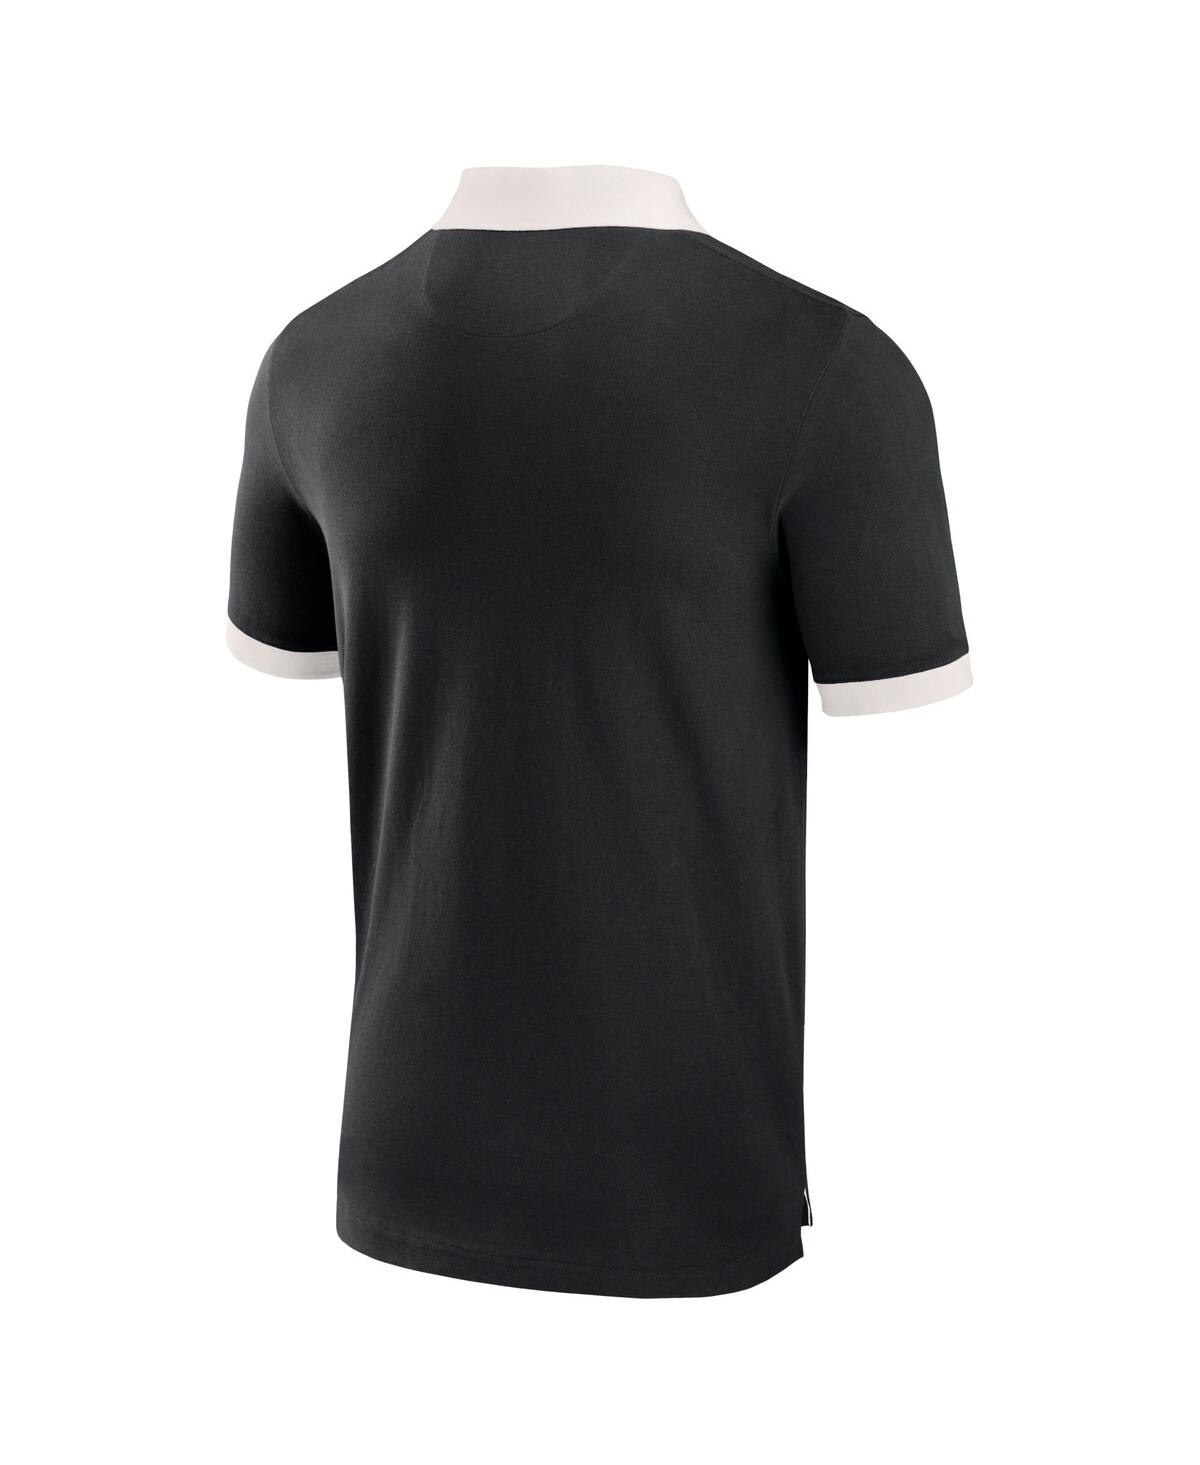 Shop Fanatics Men's  Black Lafc Second Period Polo Shirt